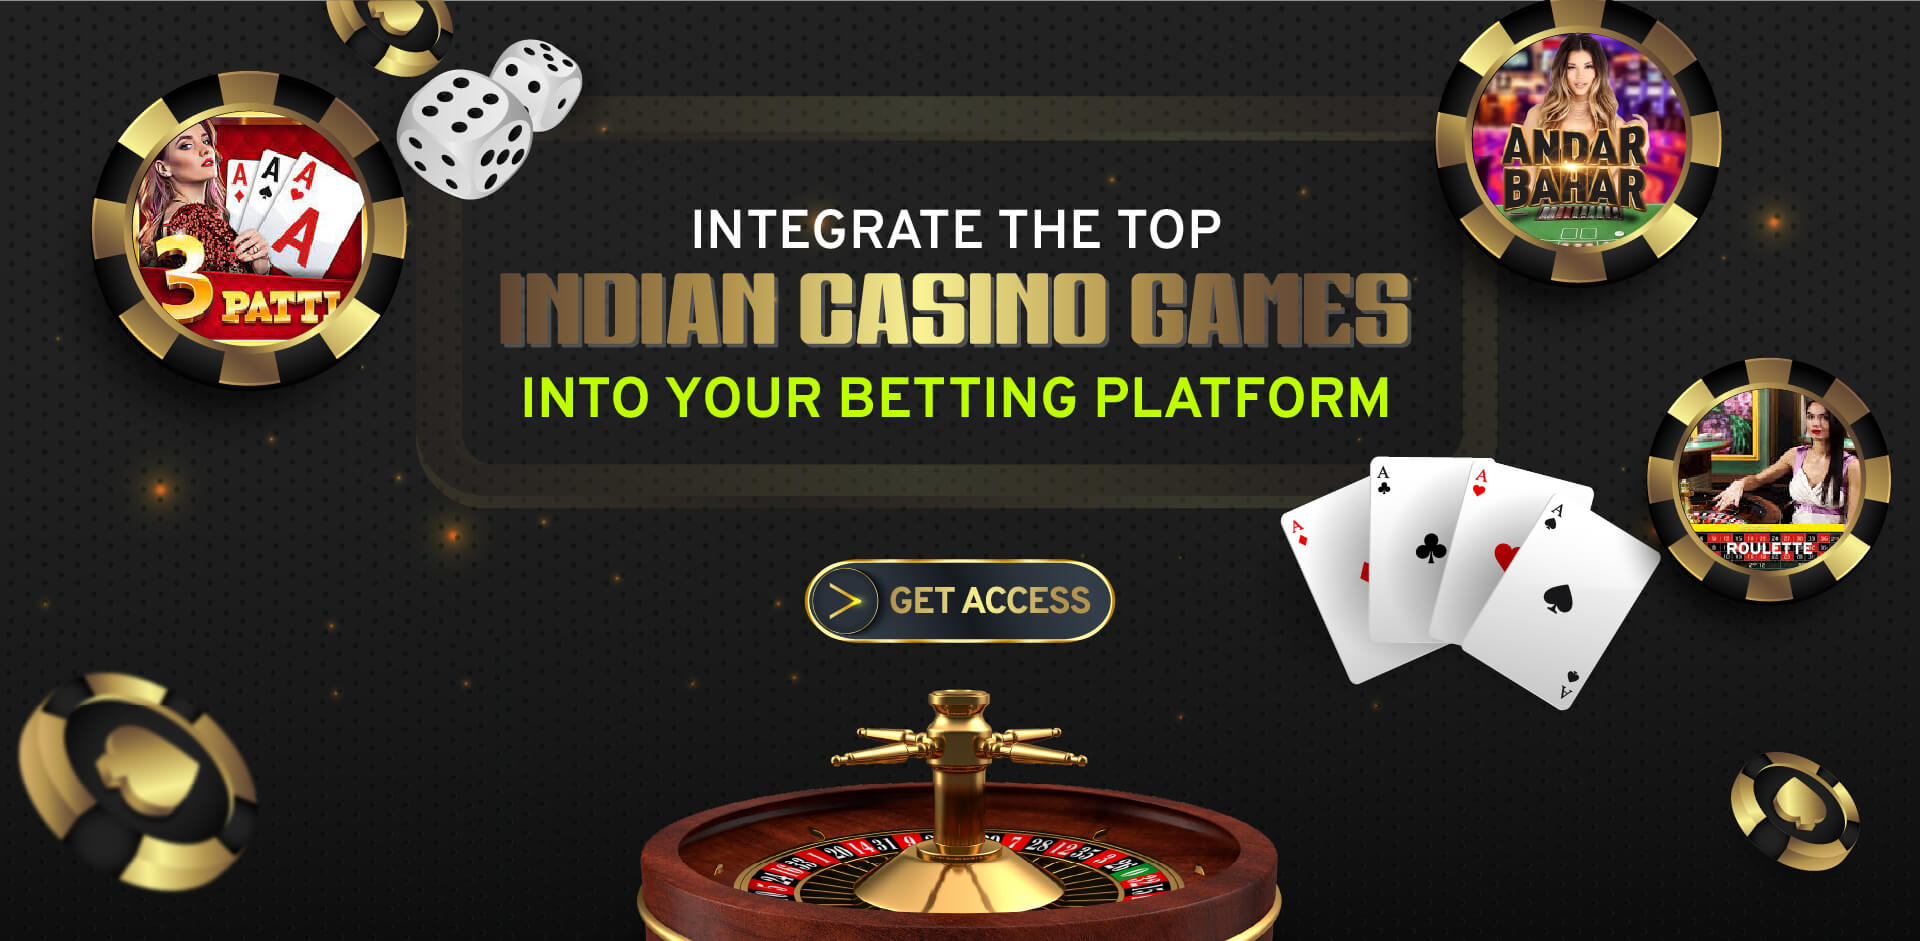 Indian Casino Games Banner Final